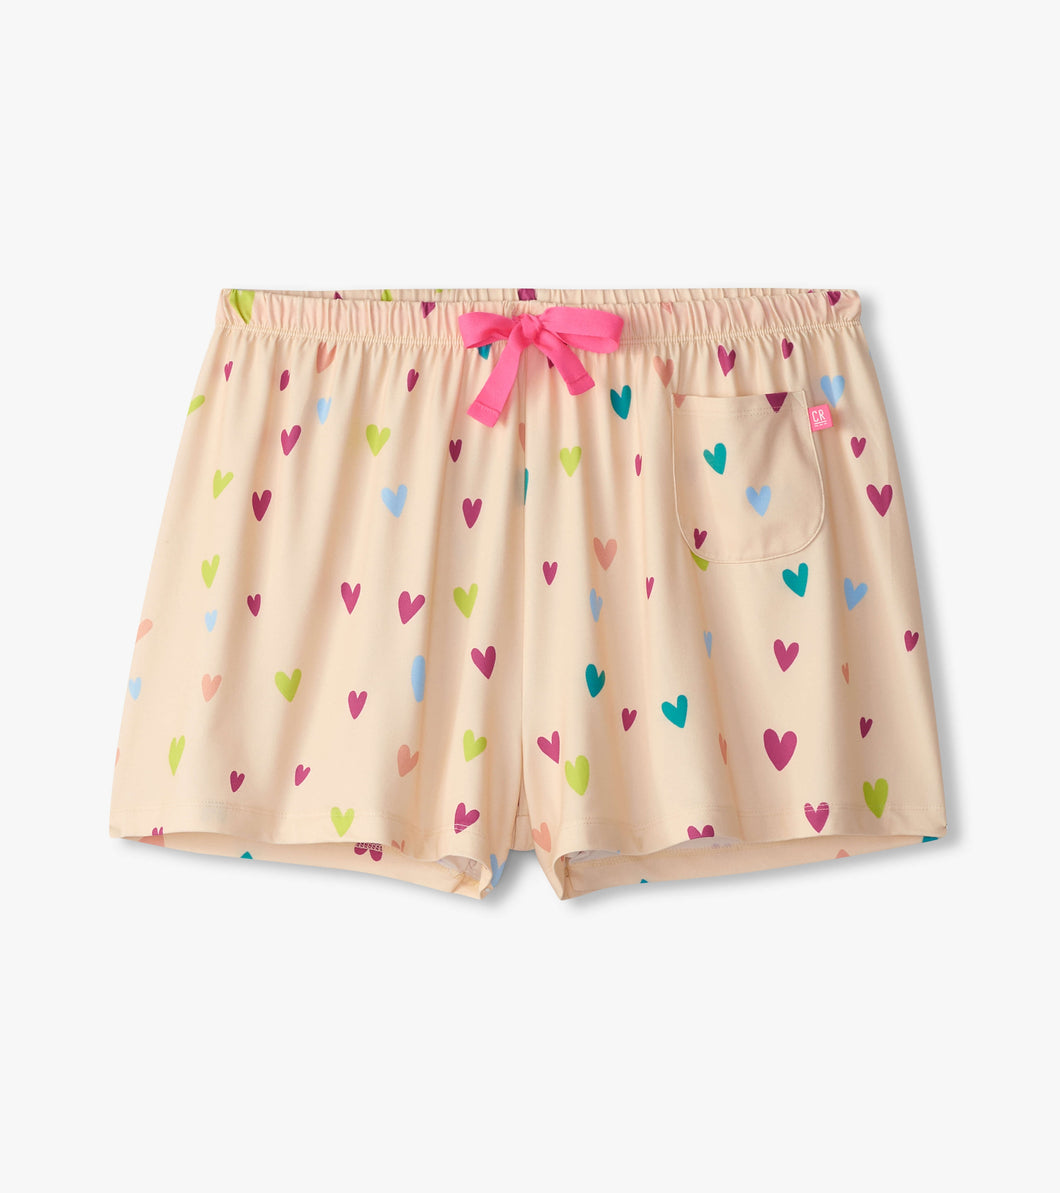 Shorts In A Bag PJ - Jelly Bean Hearts